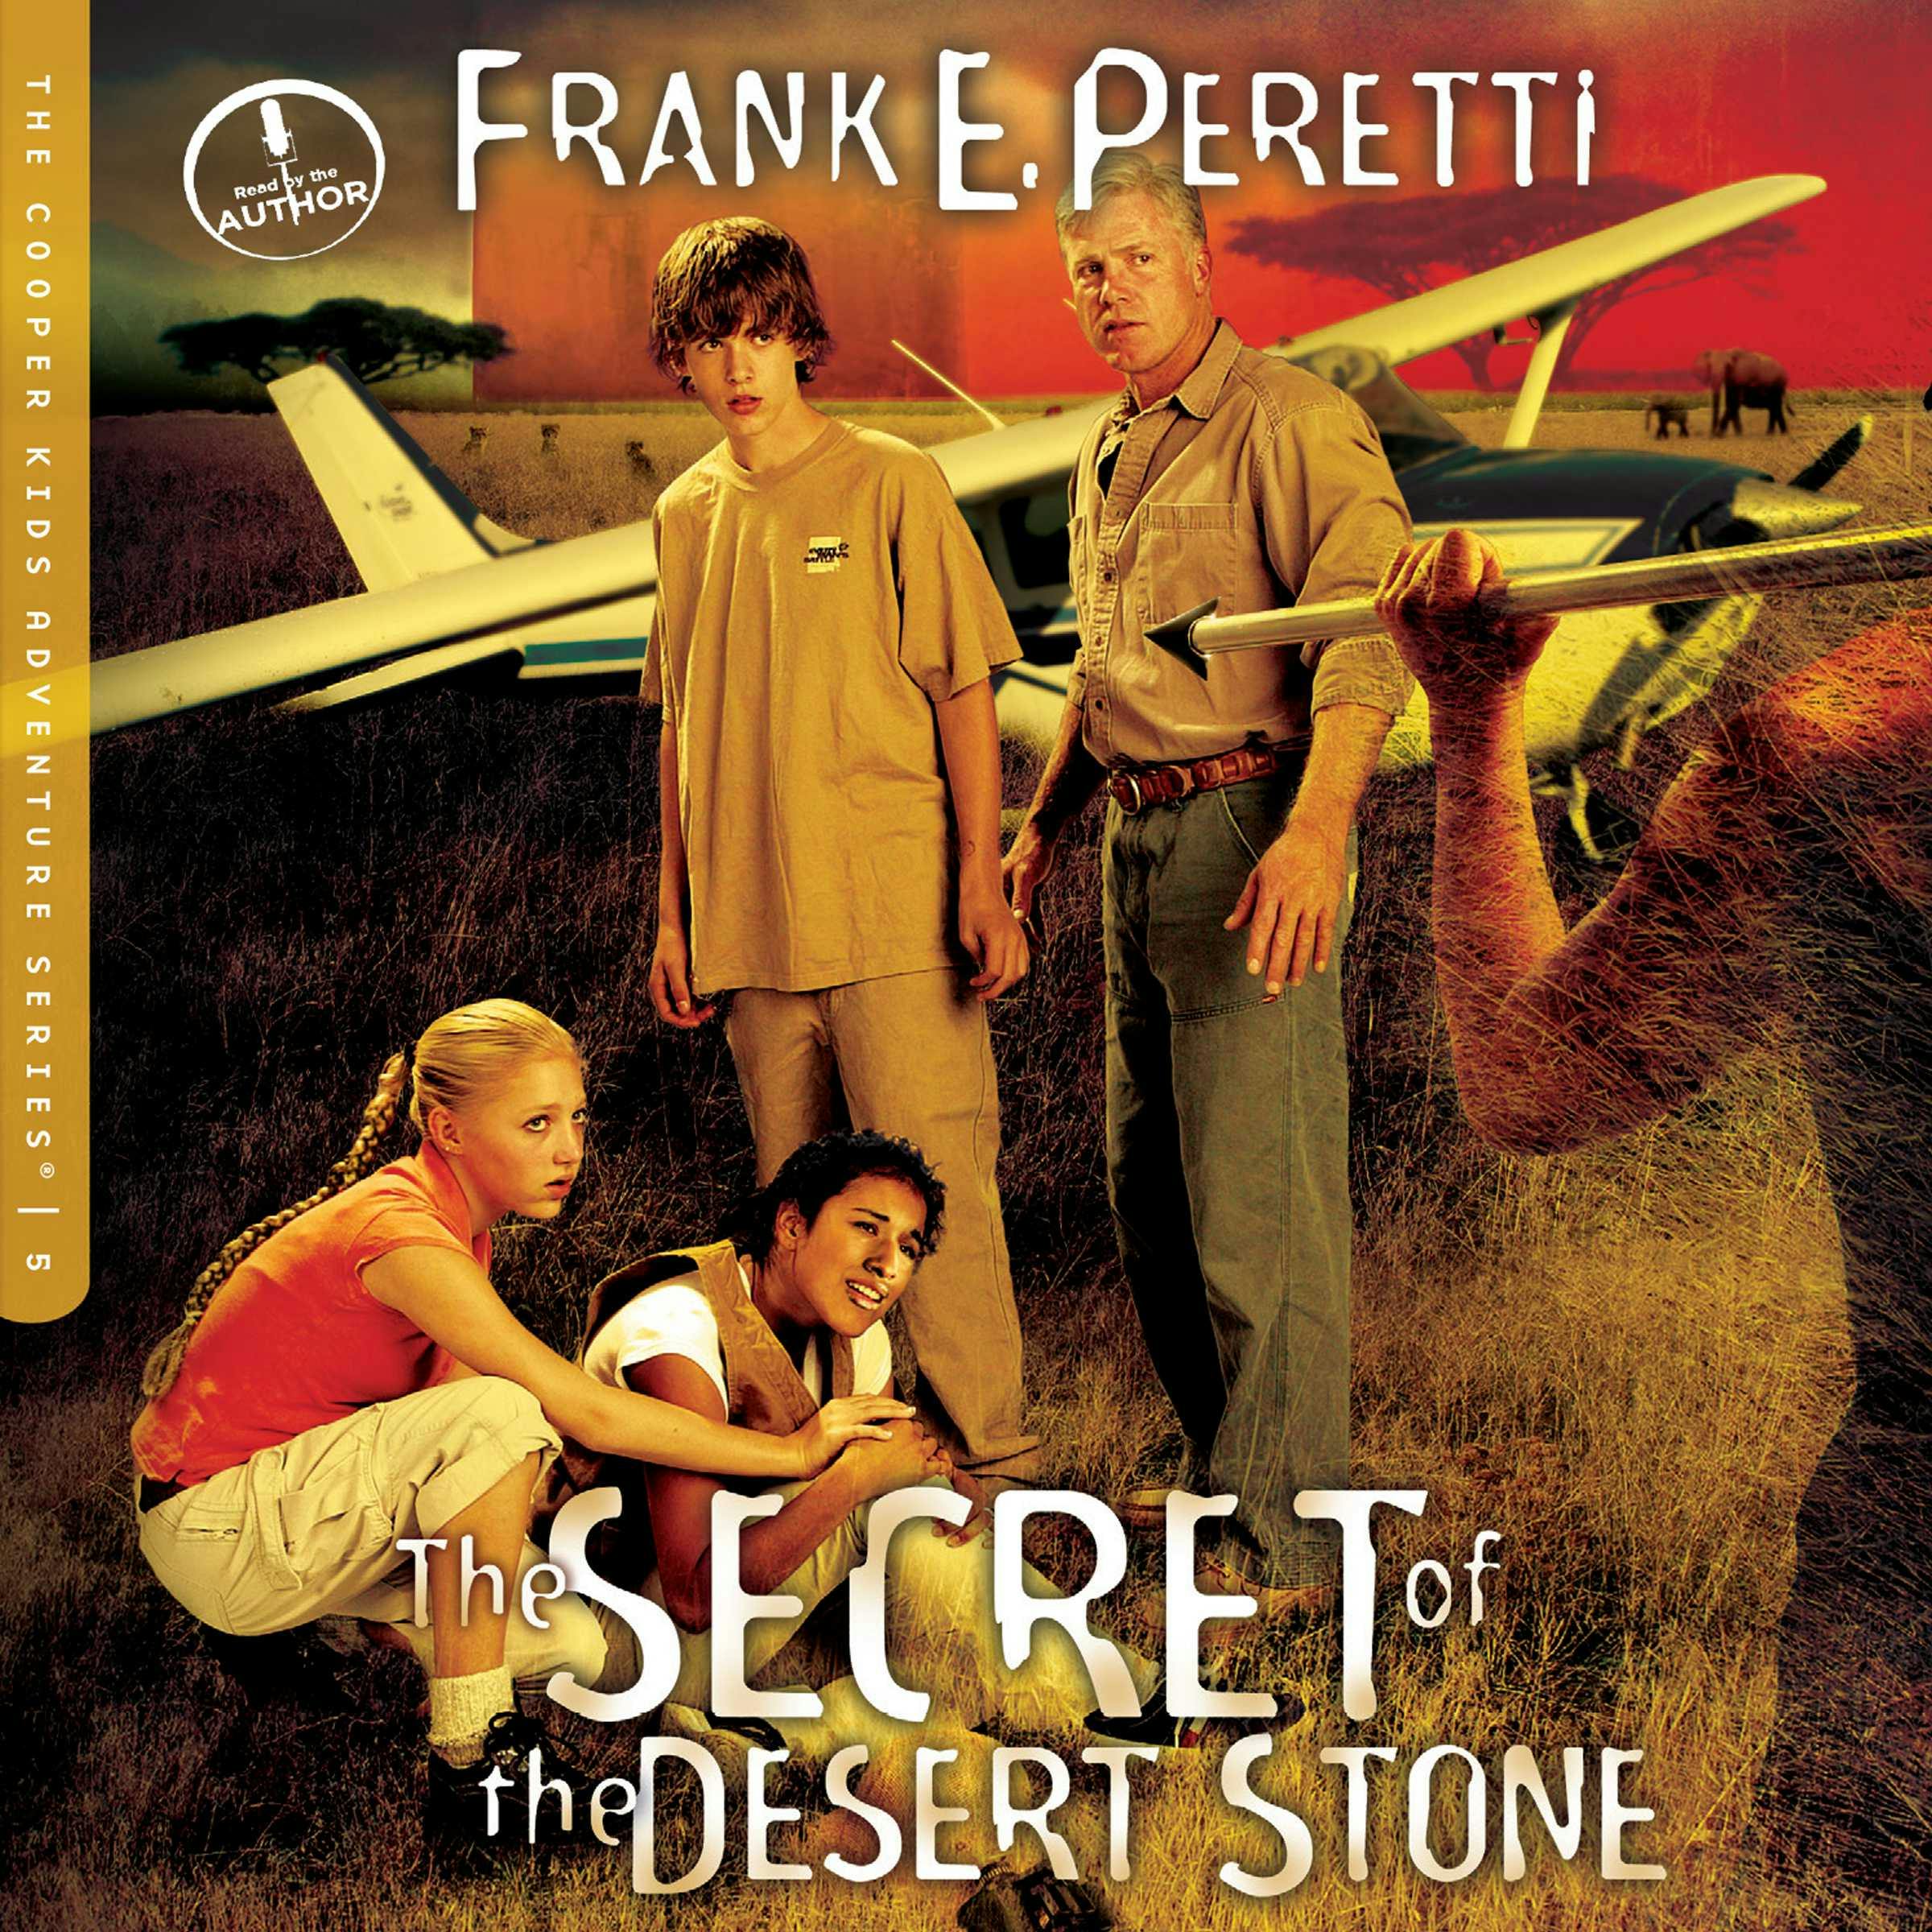 The Secret of the Desert Stone - Frank Peretti